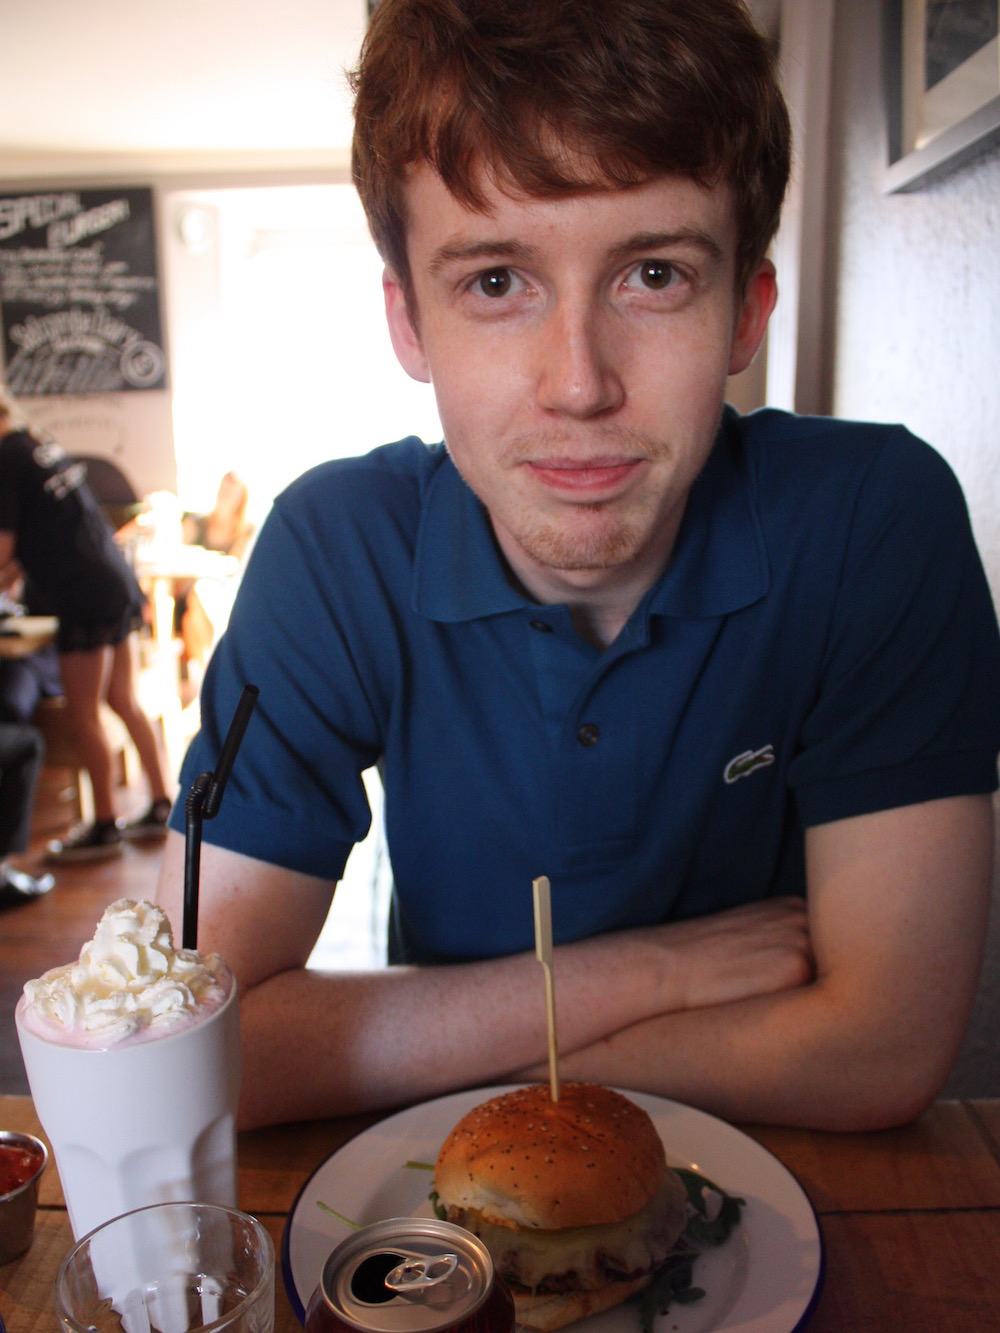 matthew-ashley-ross-cute-eating-burger-torquay-2015